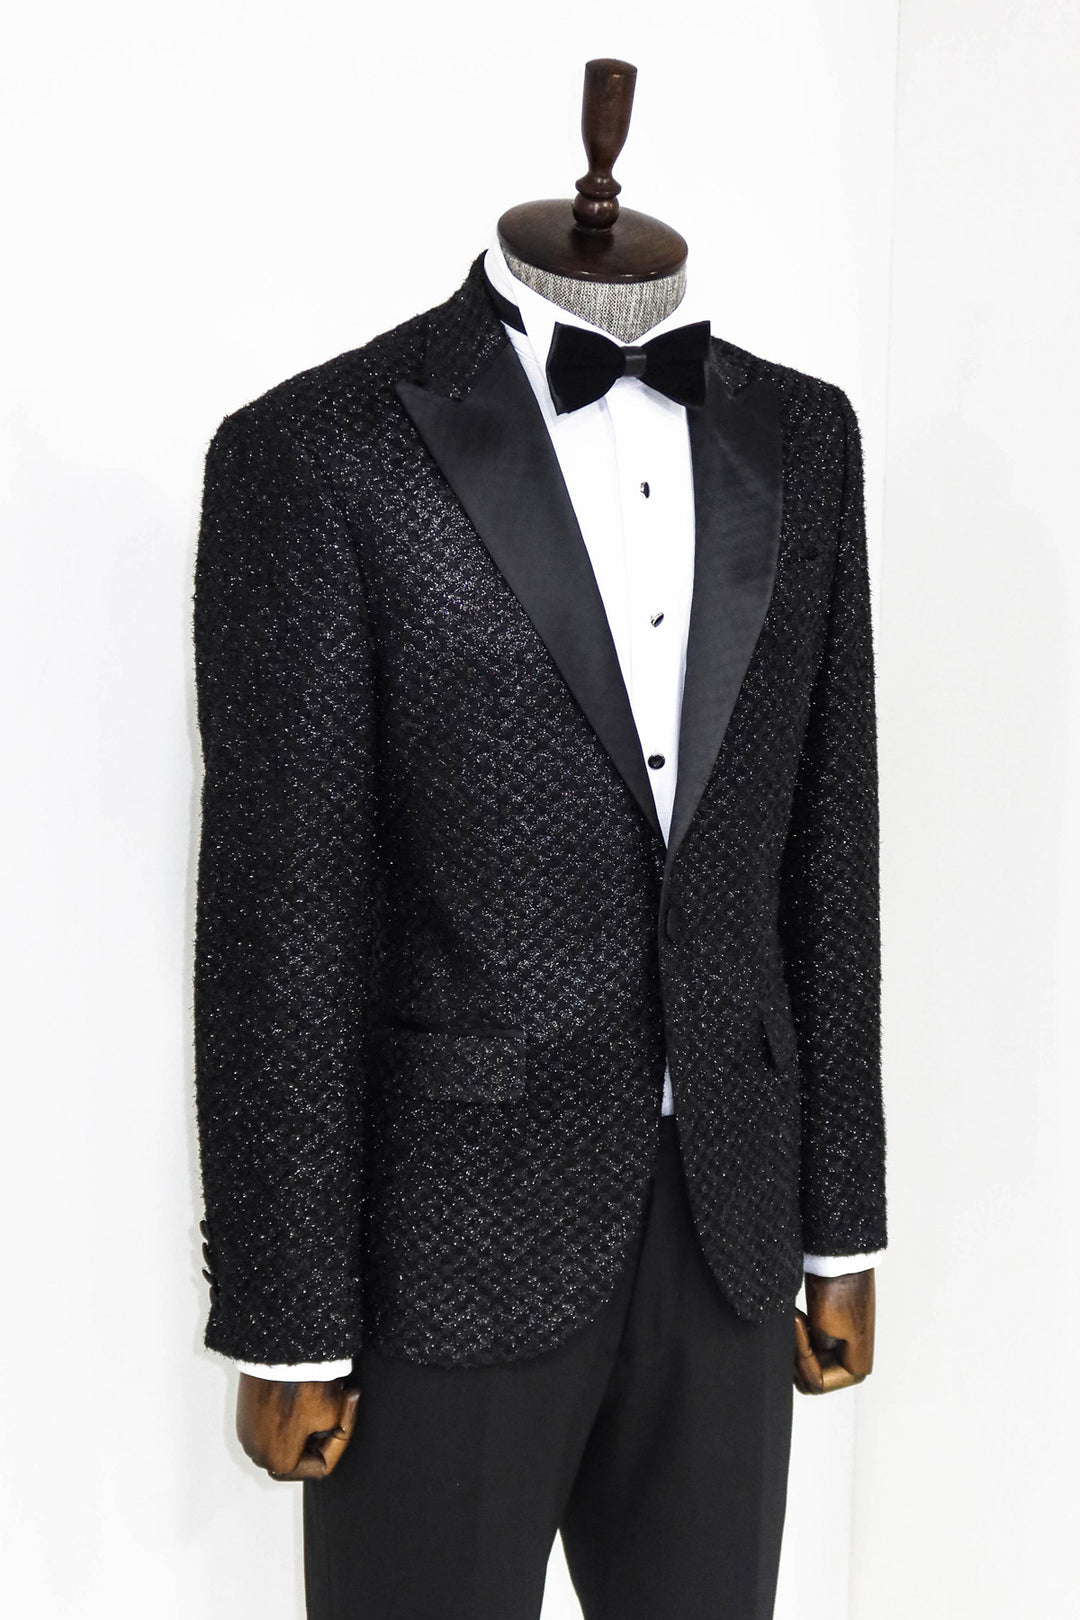 Gingham Patterned Glitter Black Men Prom Blazer - Wessi